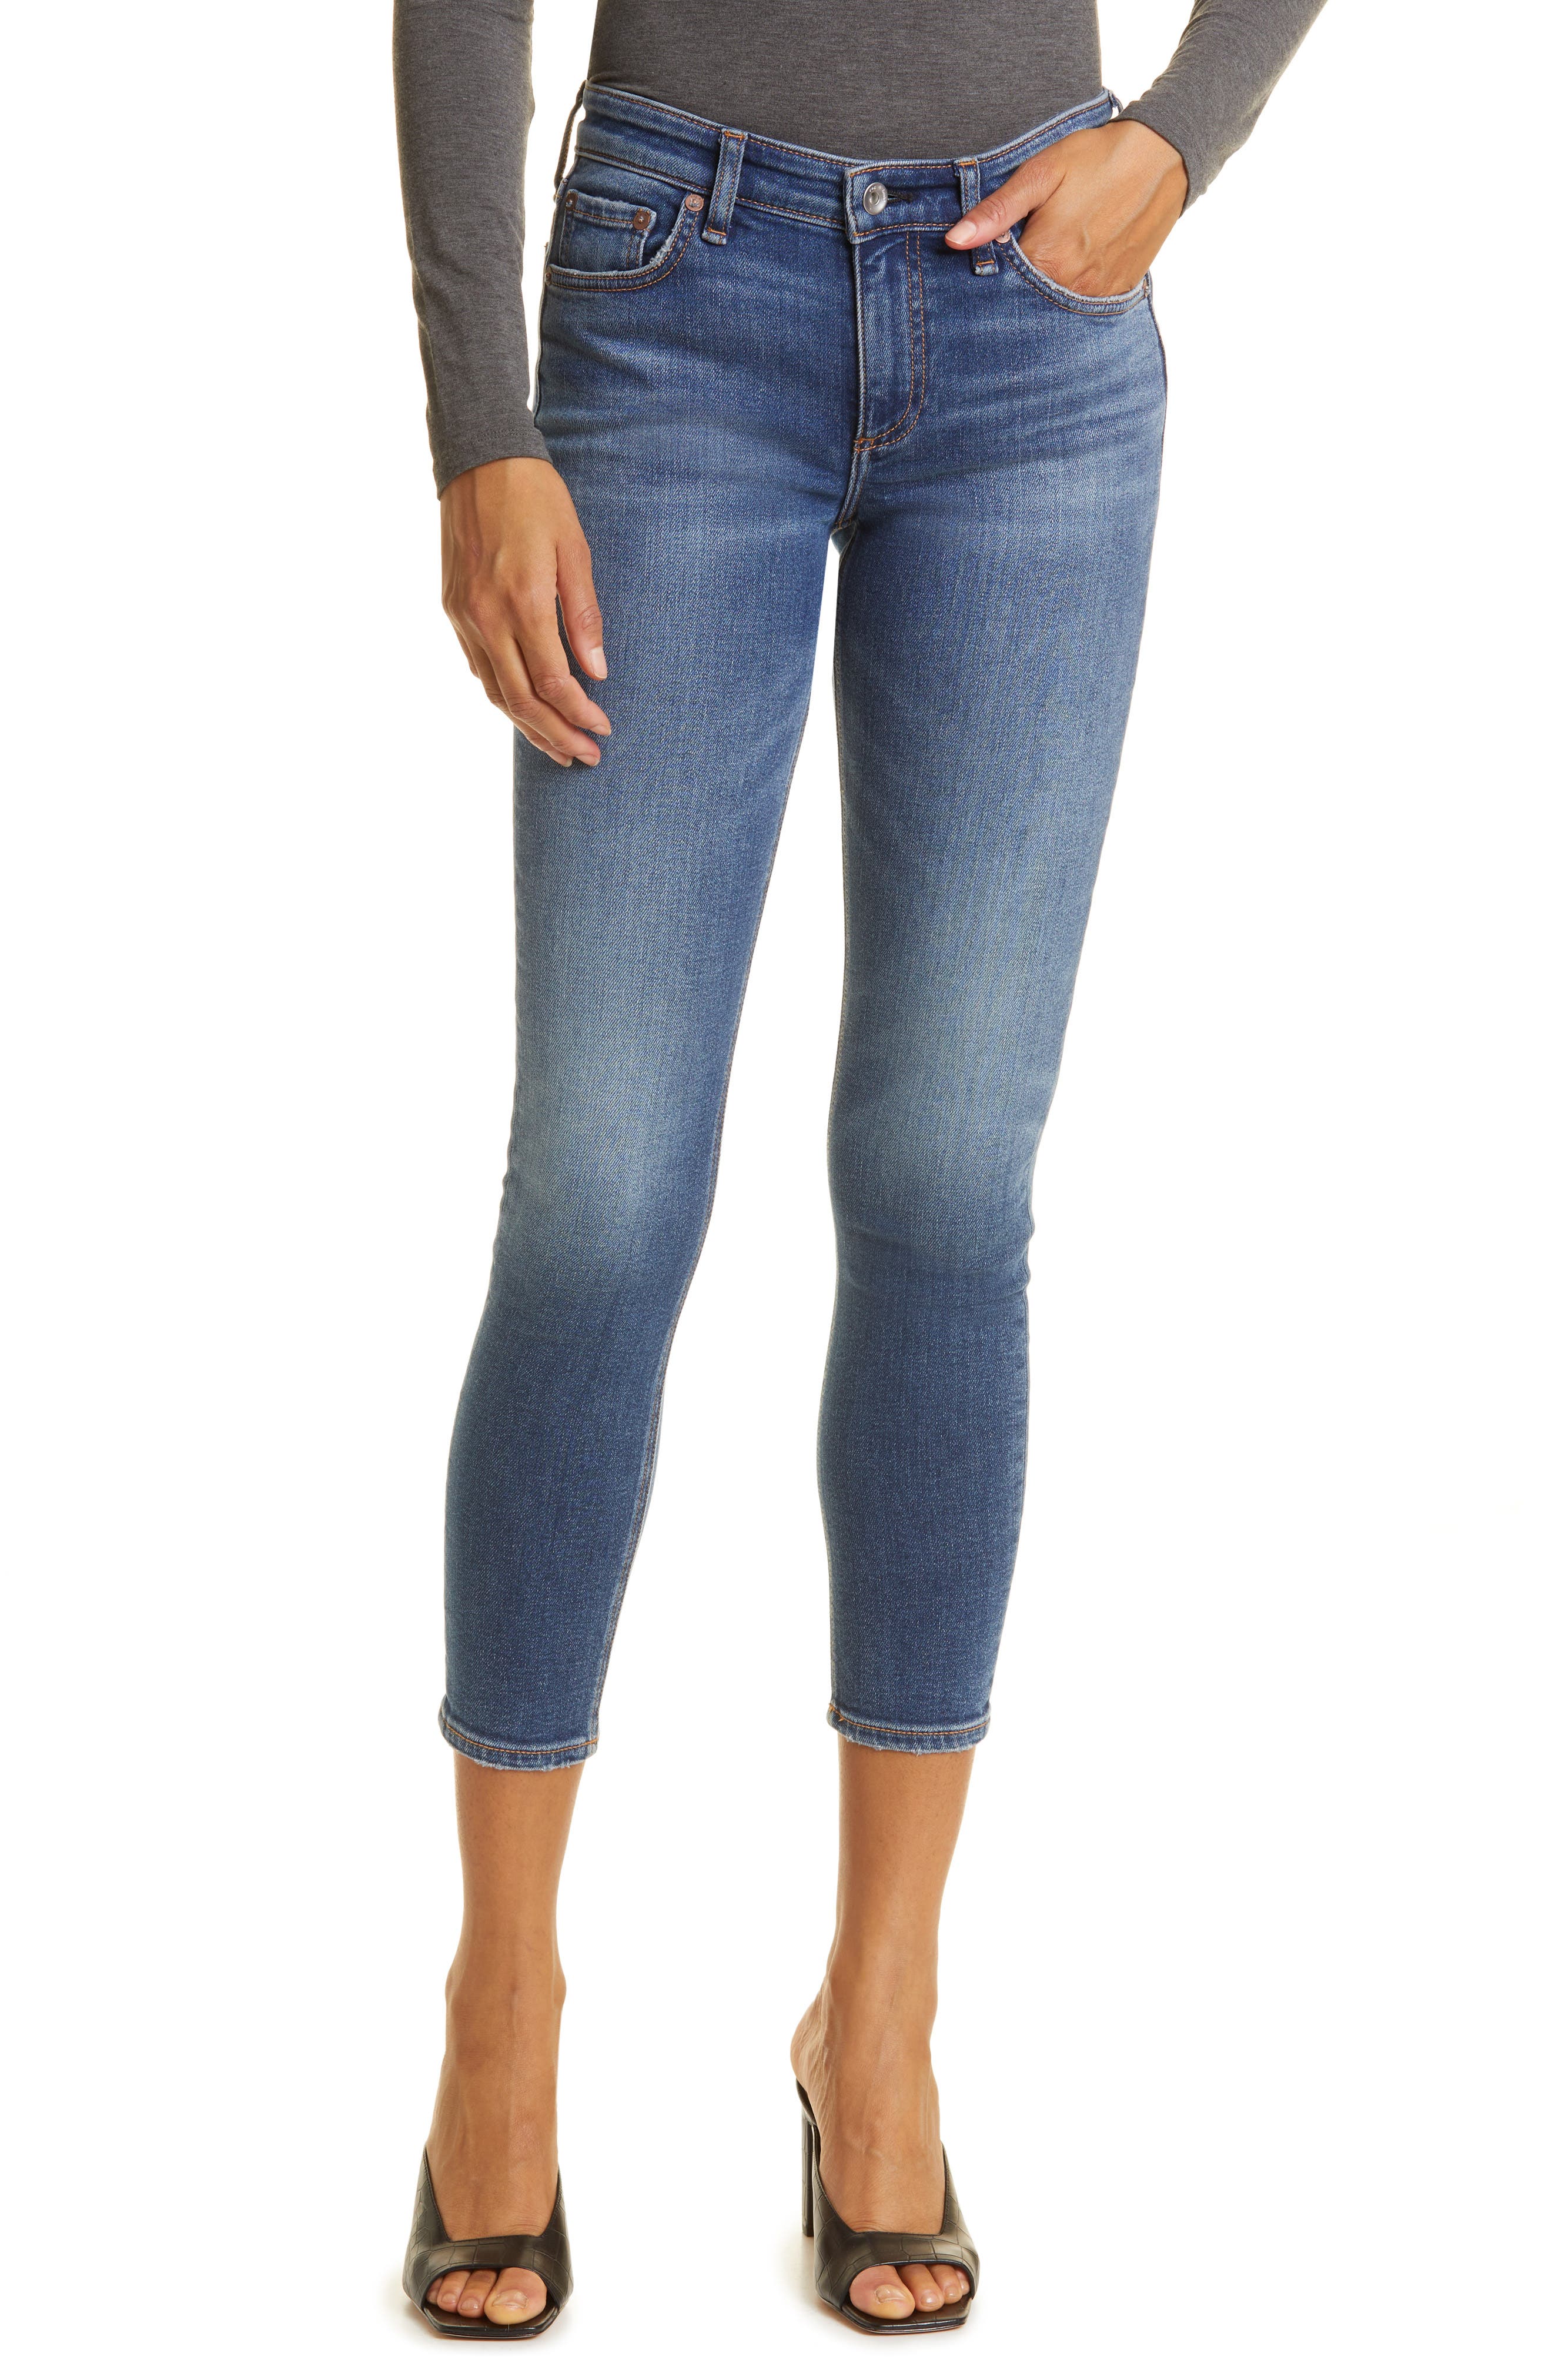 BNWT NEXT Ladies Relaxed skinny slim leg mid blue mid rise stretch jeans  R L XL 